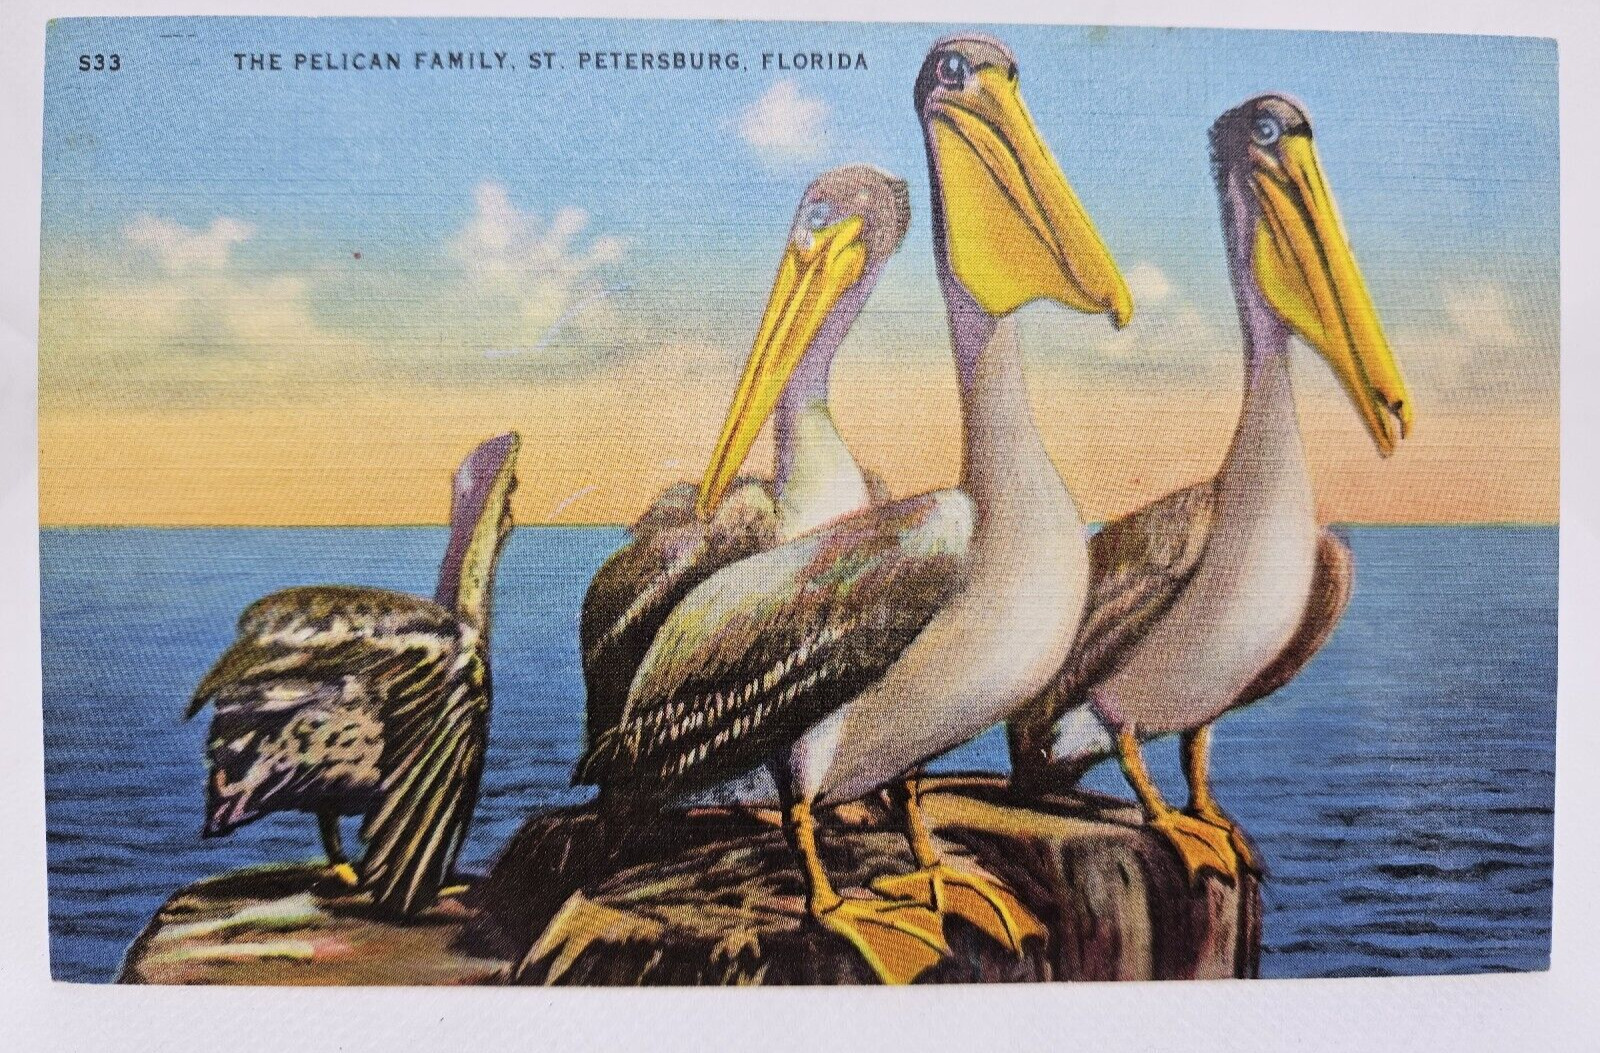 VTG Postcard Linen St. Petersburg, Florida FL The Pelican Family St. Petersburg